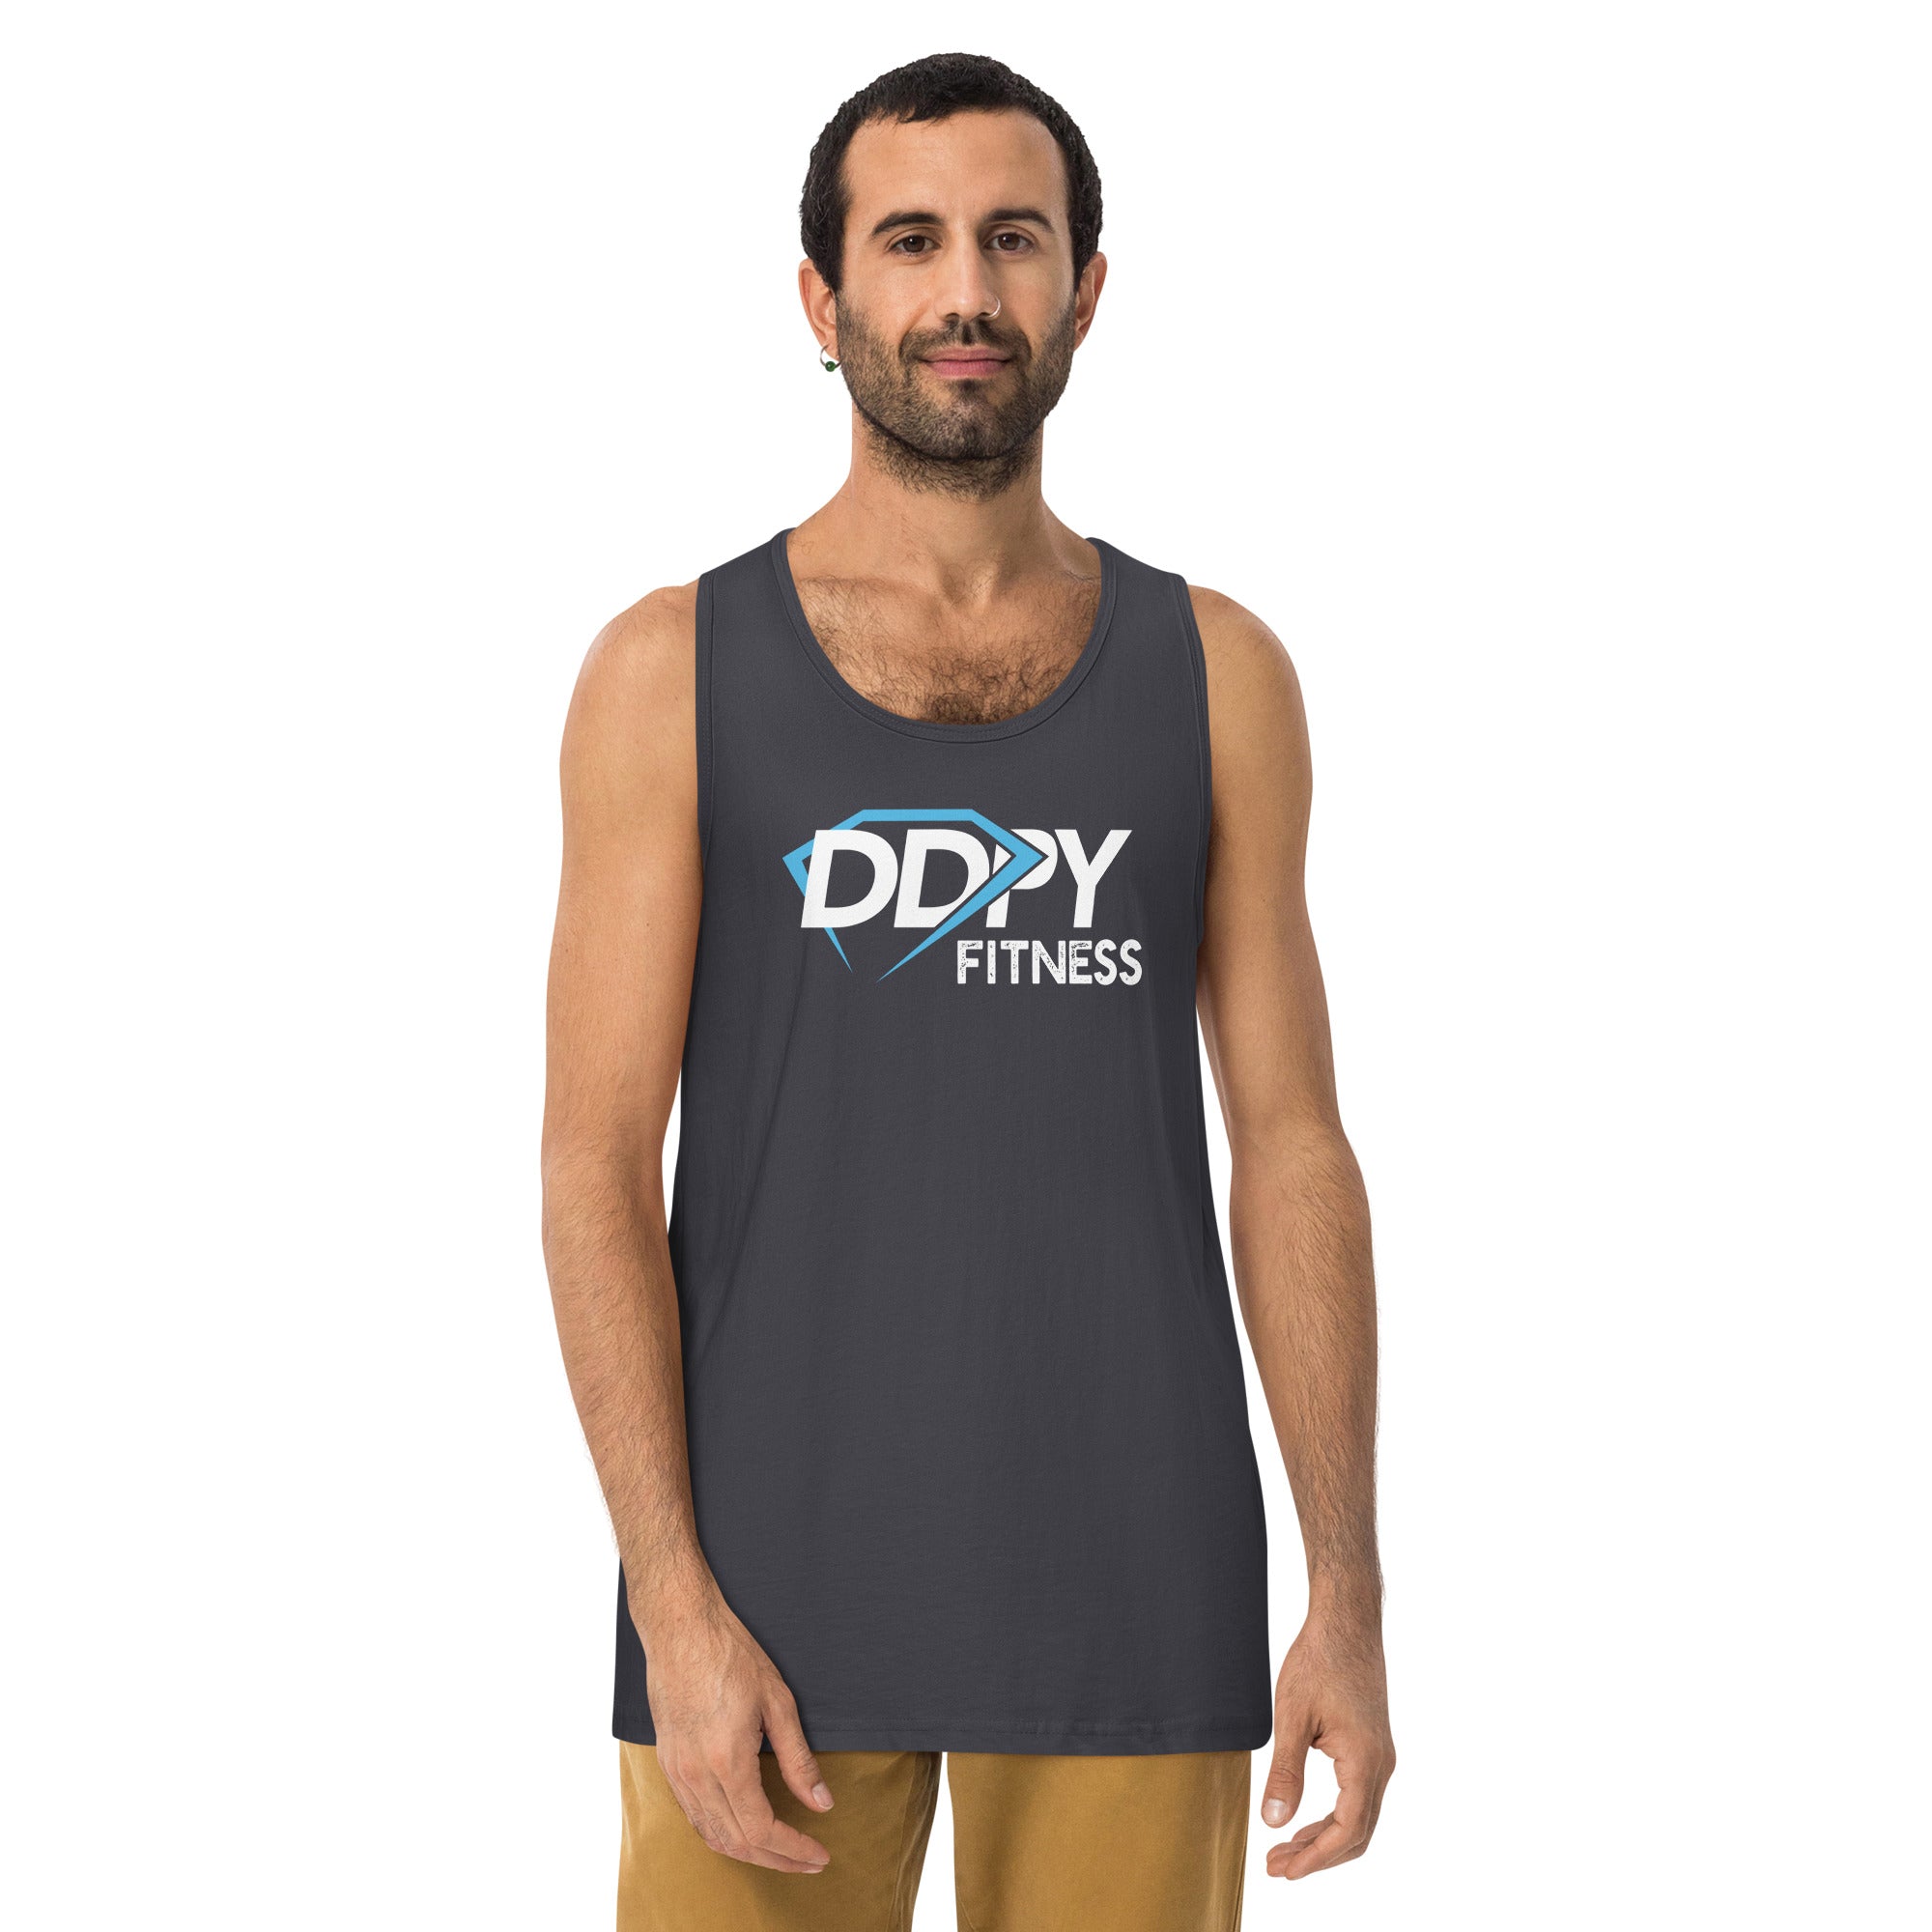 DDPY Fitness Tank (On Demand Printing)